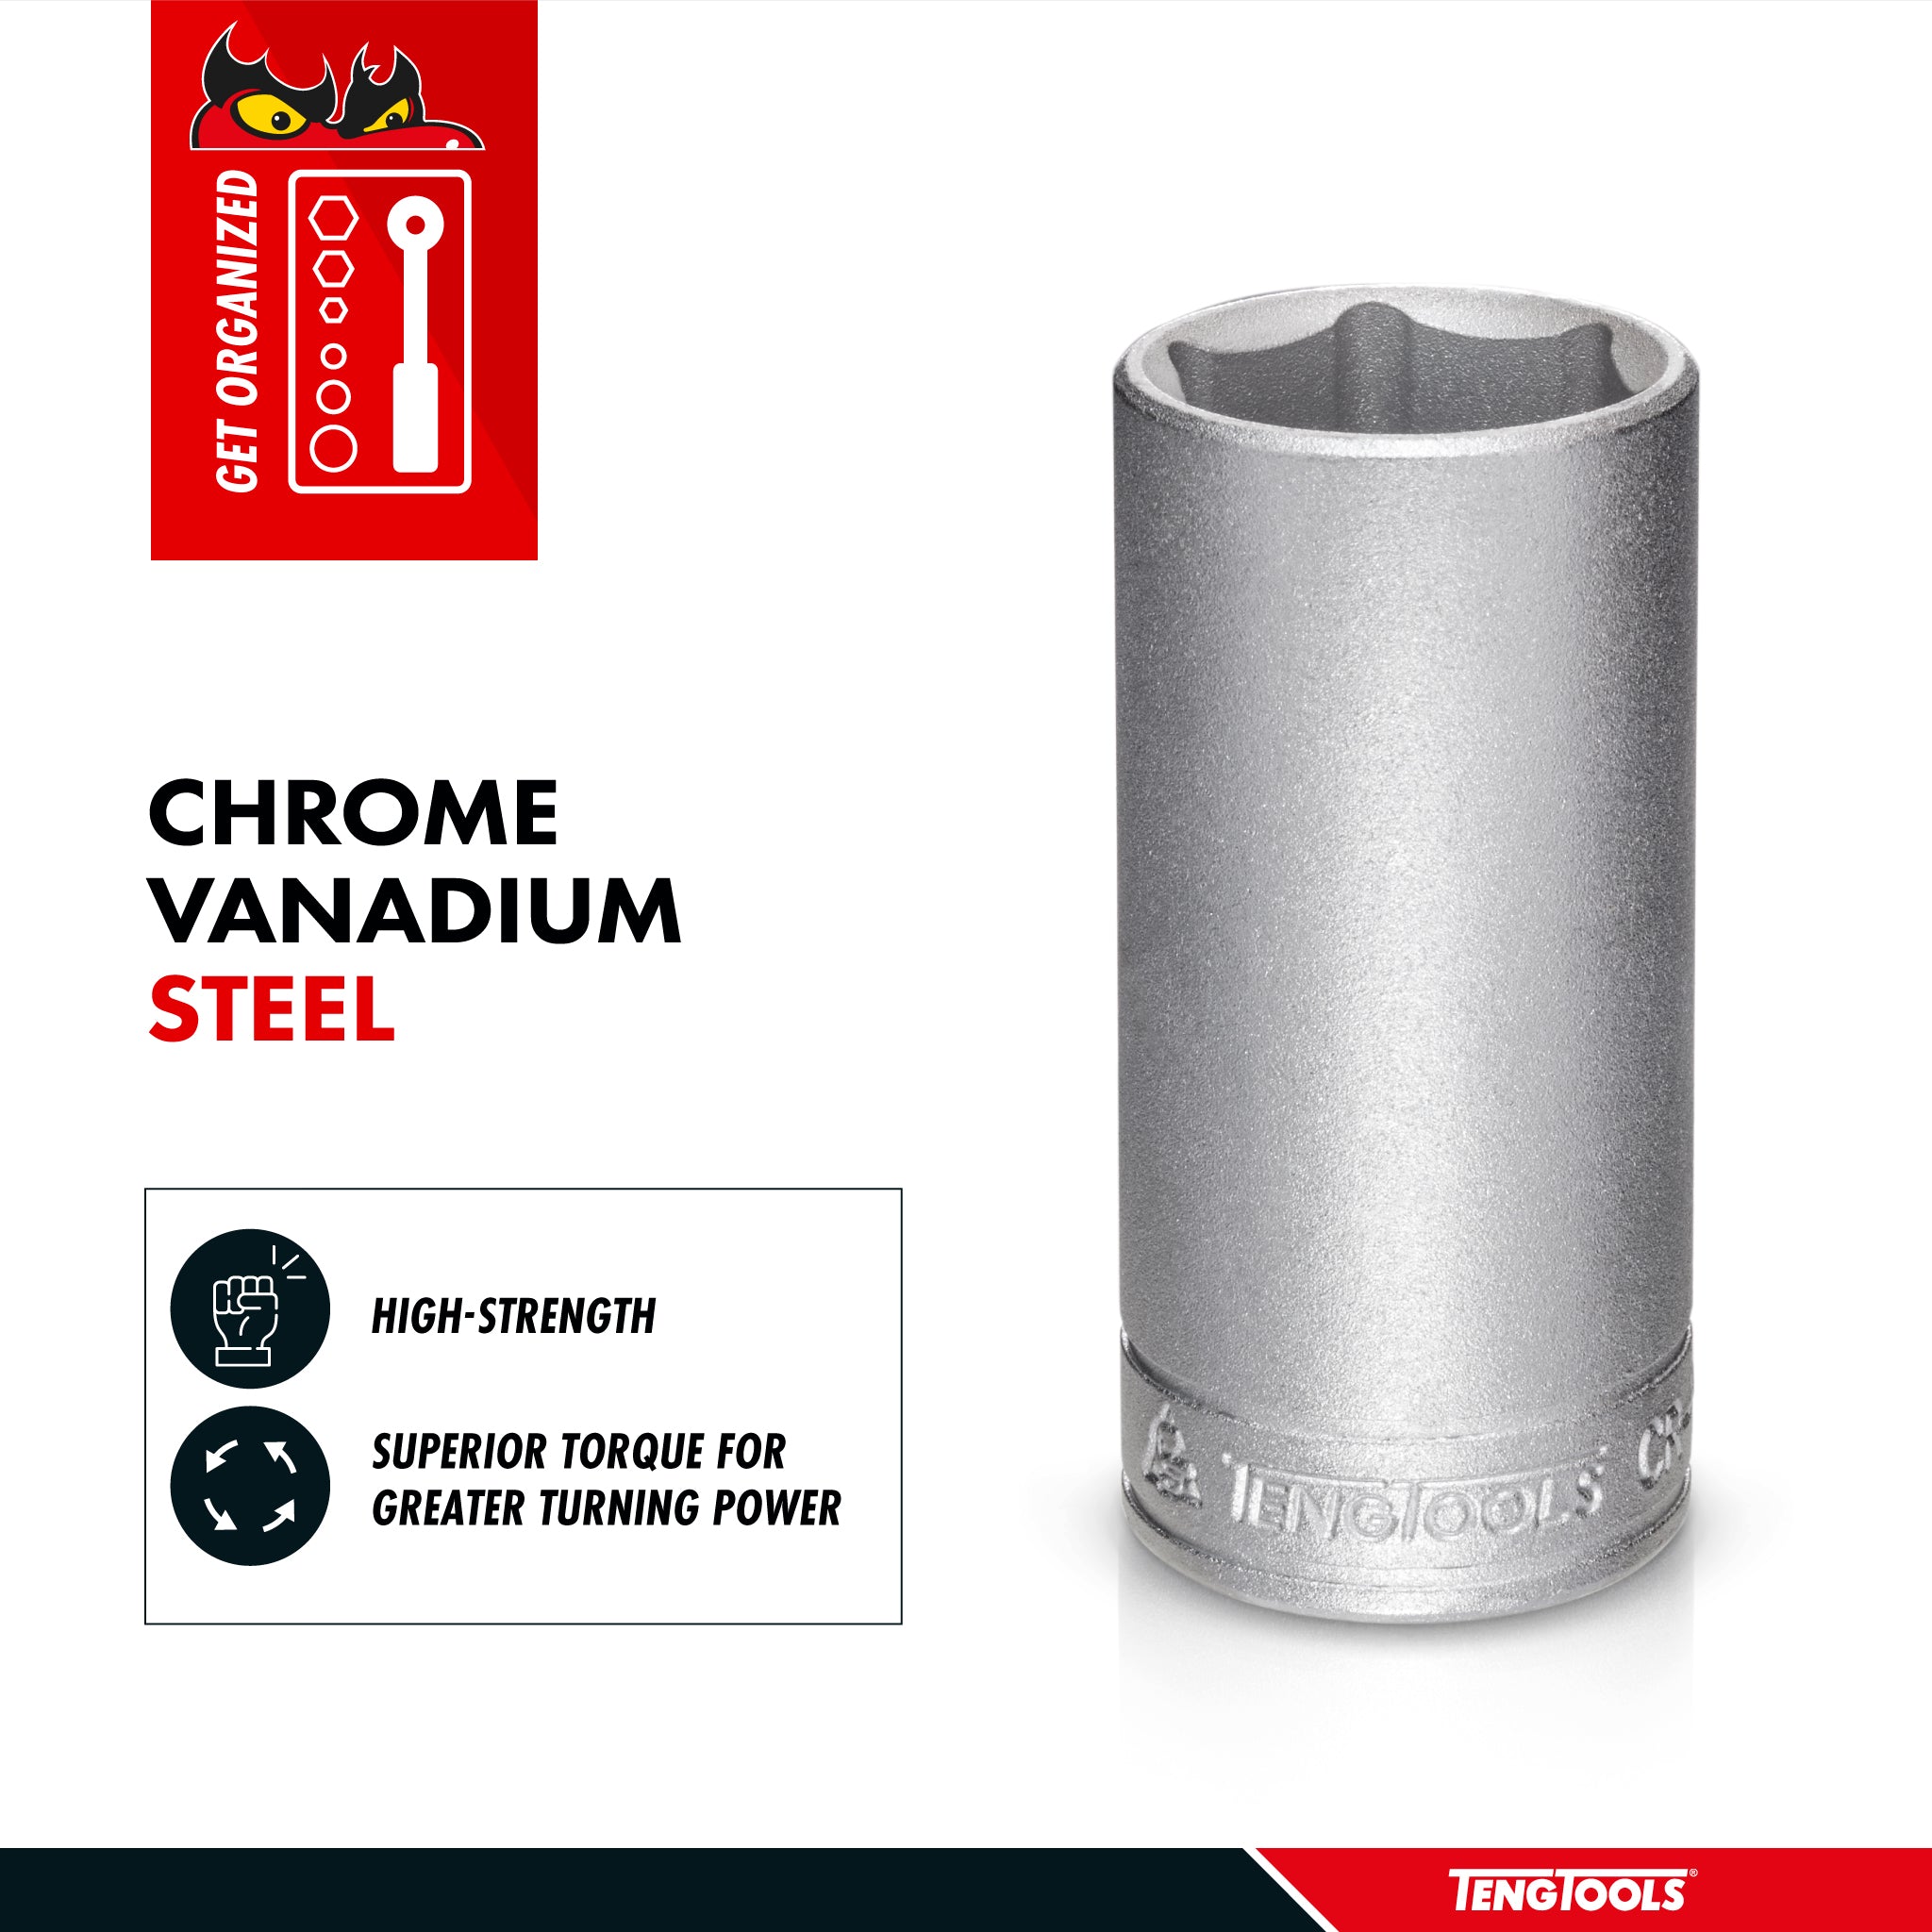 Teng Tools 3/8 Inch Drive 6 Point Metric Deep Chrome Vanadium Sockets - 14mm